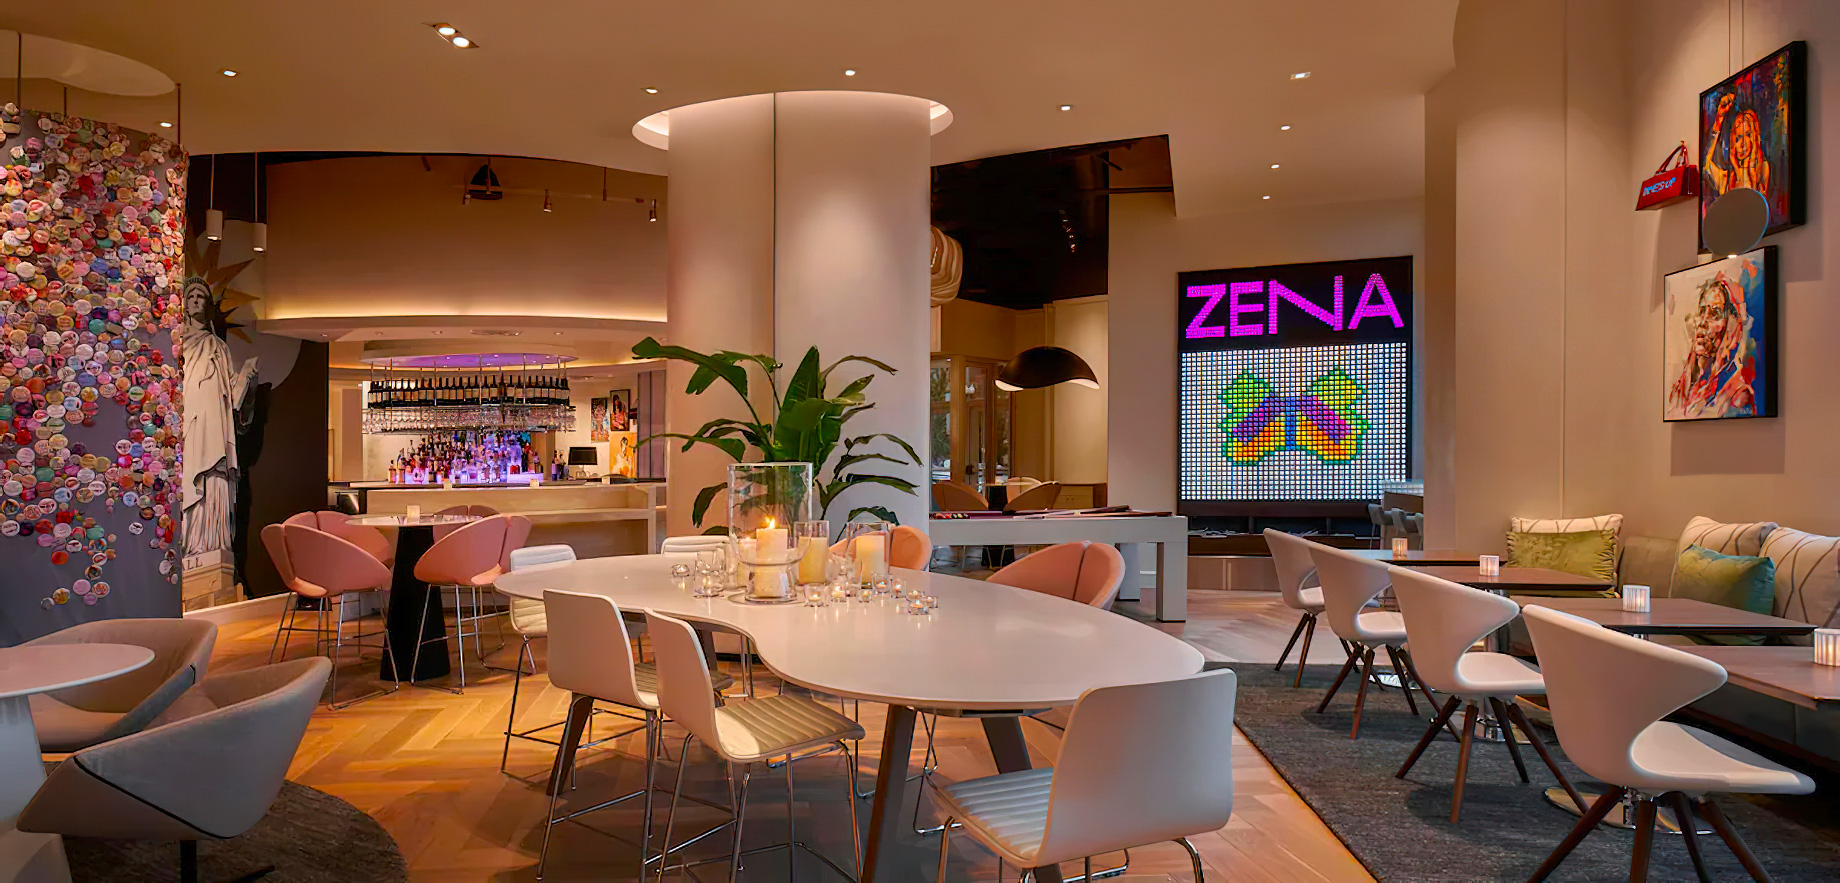 Hotel Zena, a Viceroy Urban Retreat – Washington, DC, USA – Figleaf Bar & Lounge